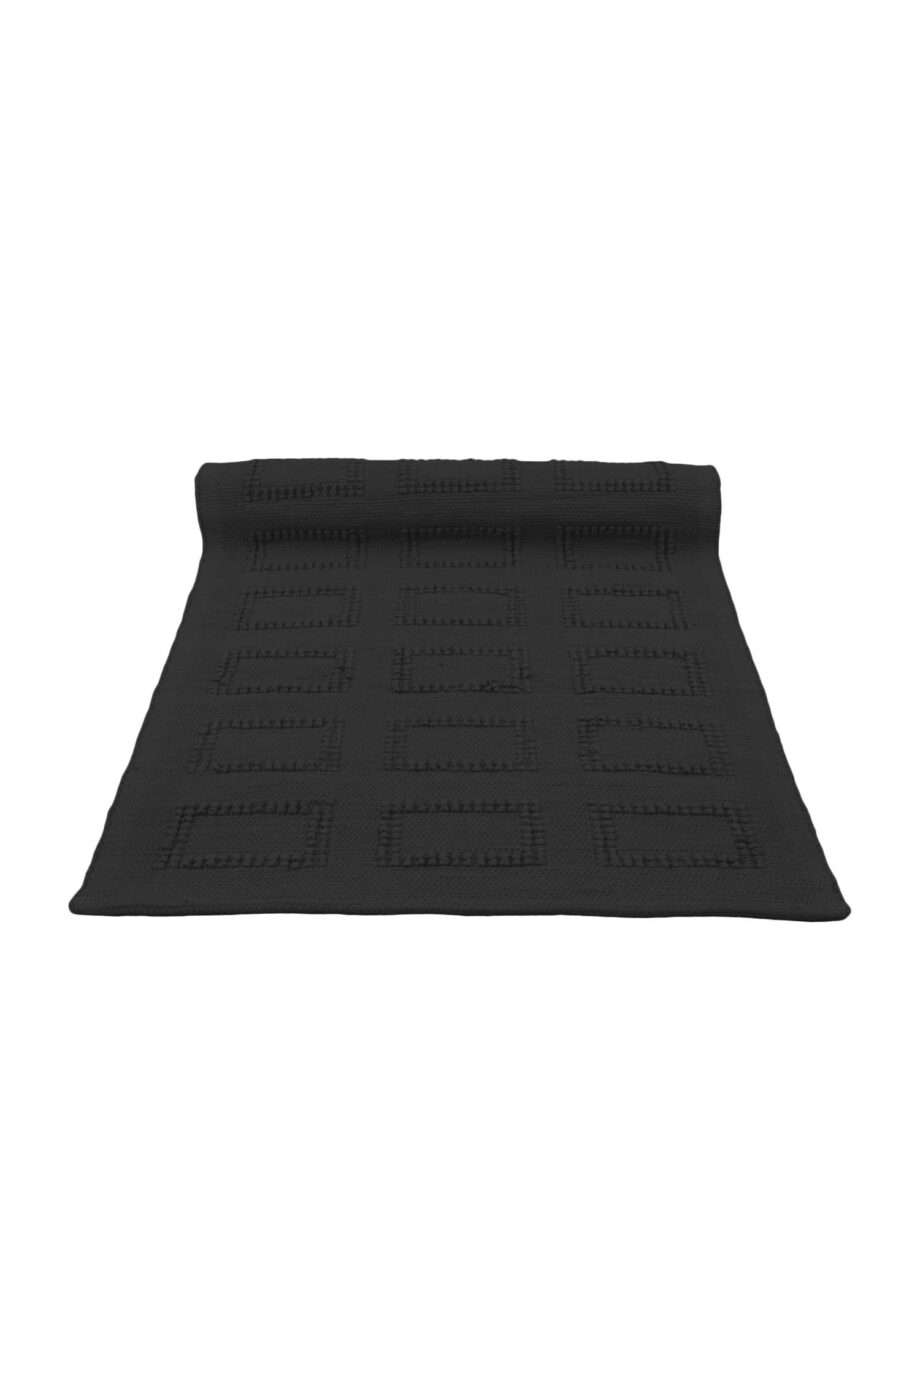 quadro black woven cotton rug medium